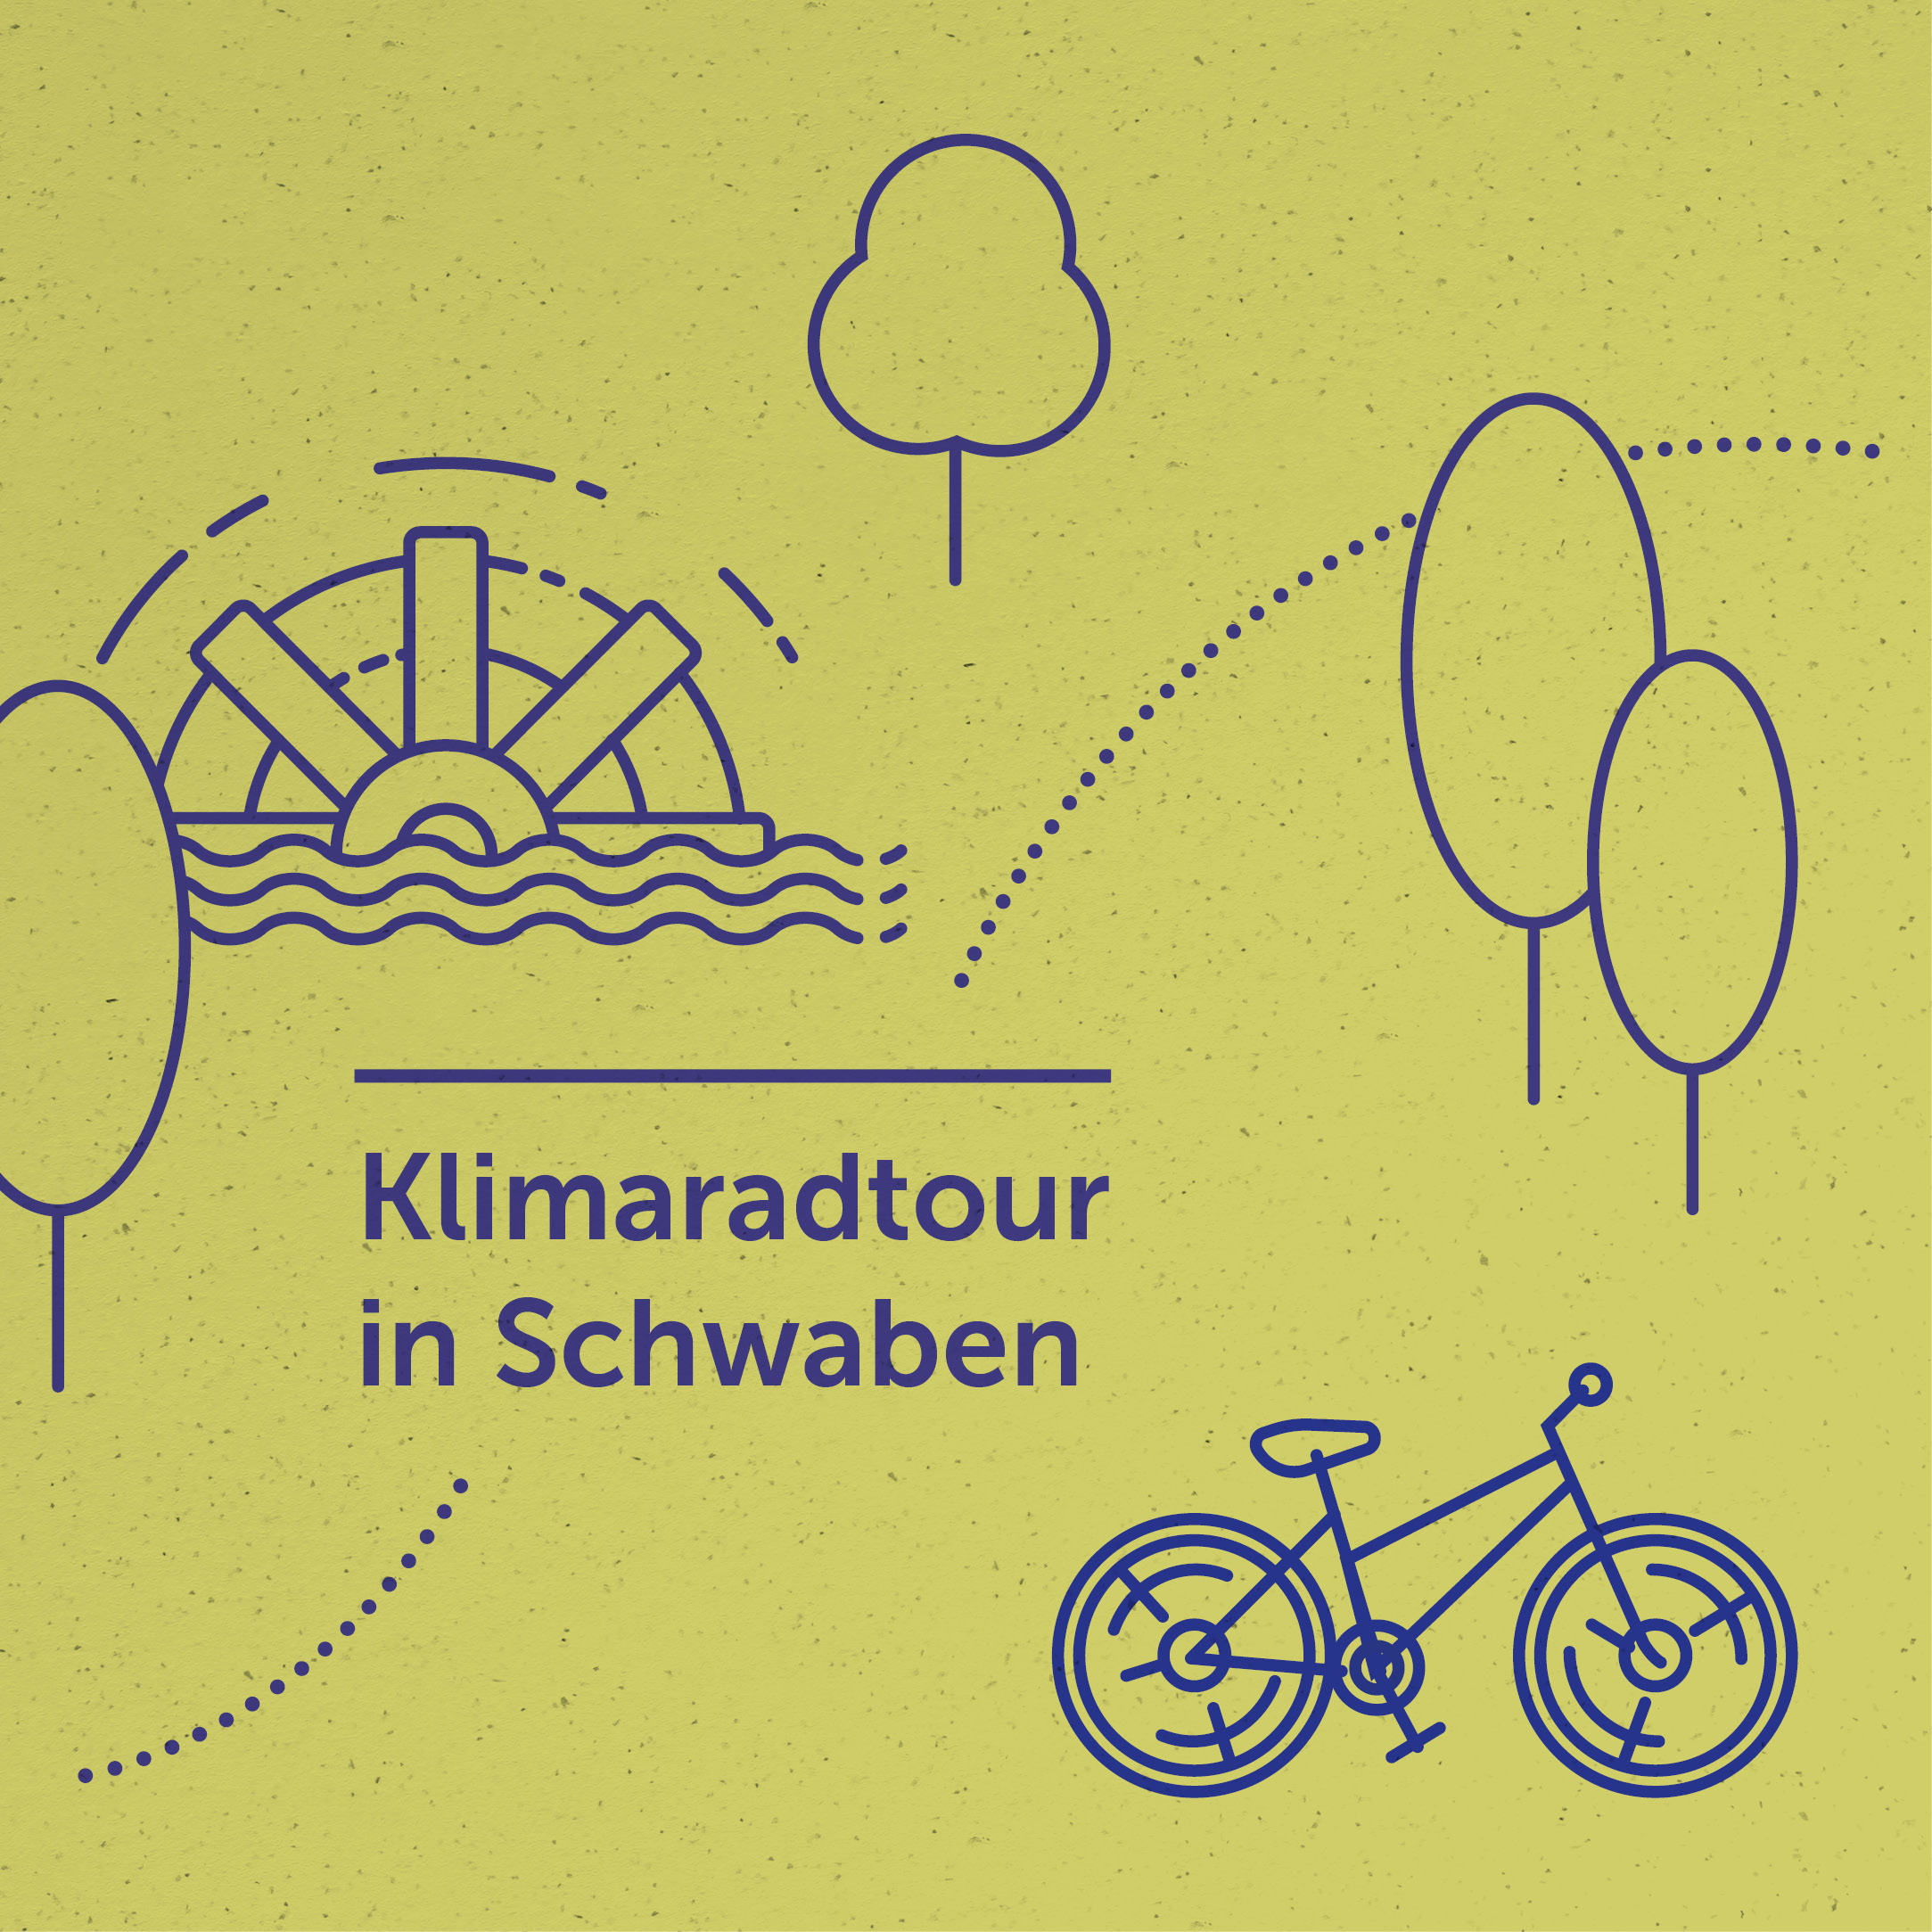 Klimaradtour in Schwaben